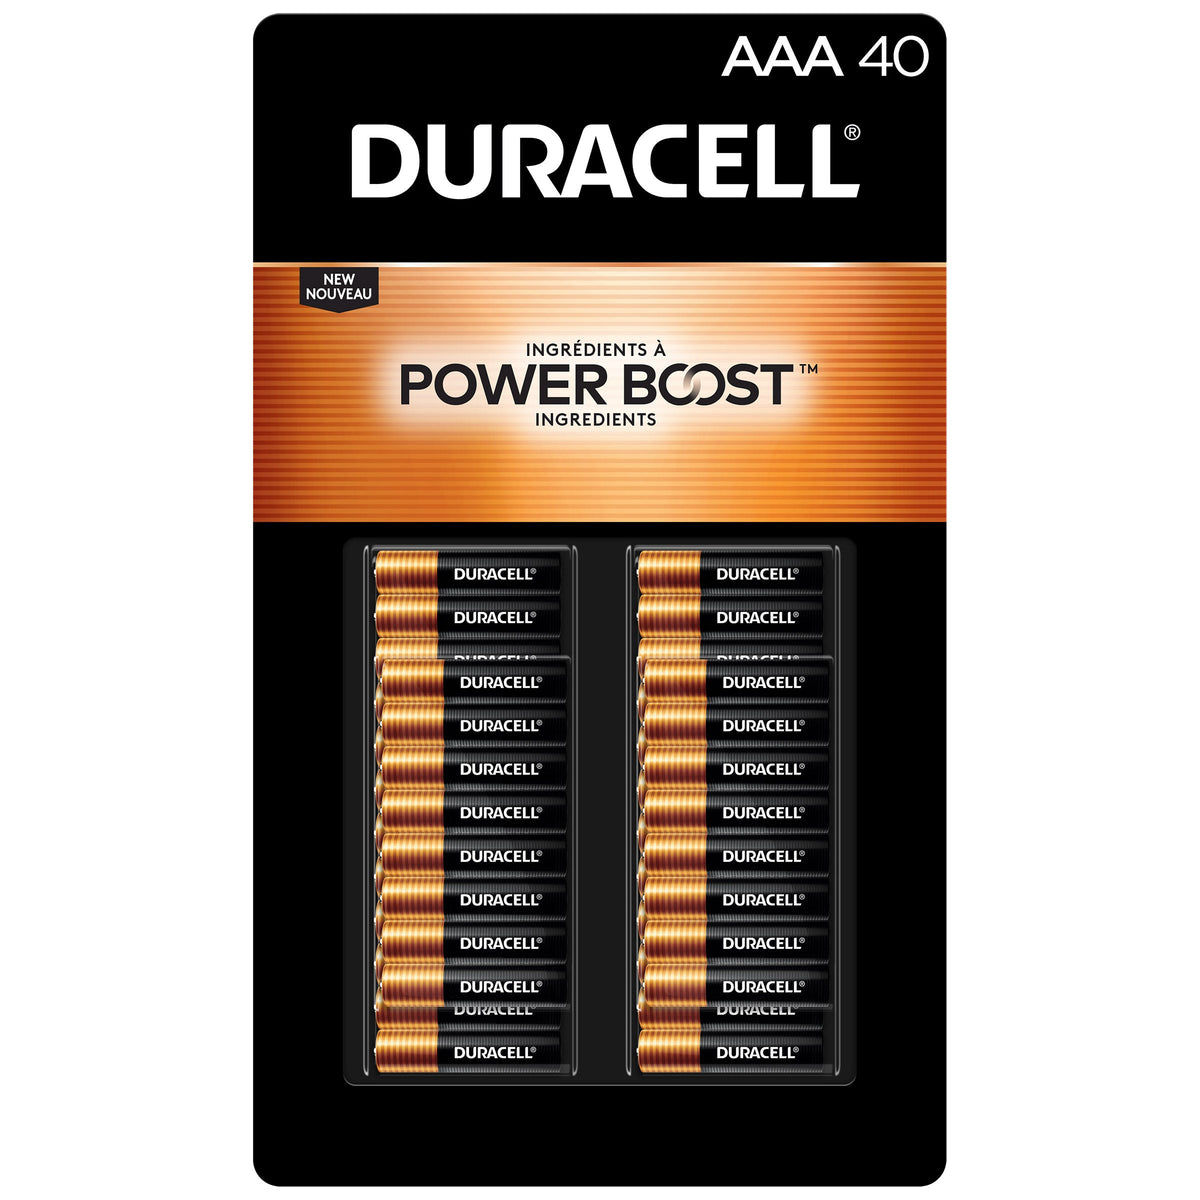 Duracell Coppertop Alkaline AAA Batteries, 40-count Image